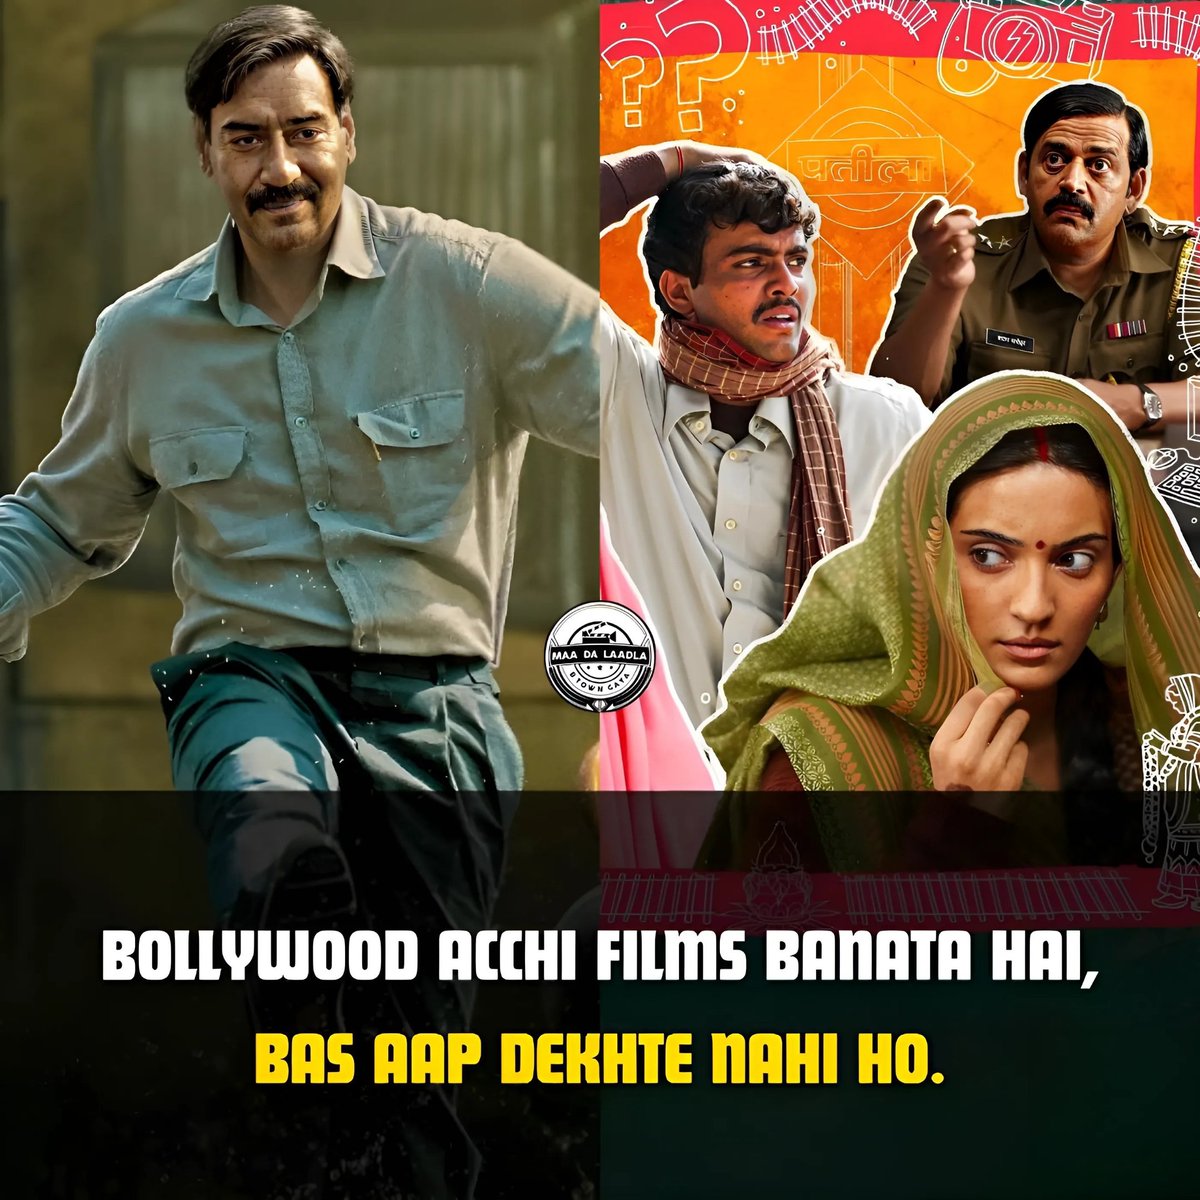 That's it. That is the post! 🙏🏻❤️ #Bollywood

#Maidaan #LaapataaLadies #AjayDevgn #AamirkhanProductions #AamirKhan #KiranRao #SparshSrivastav #PratibhaRanta